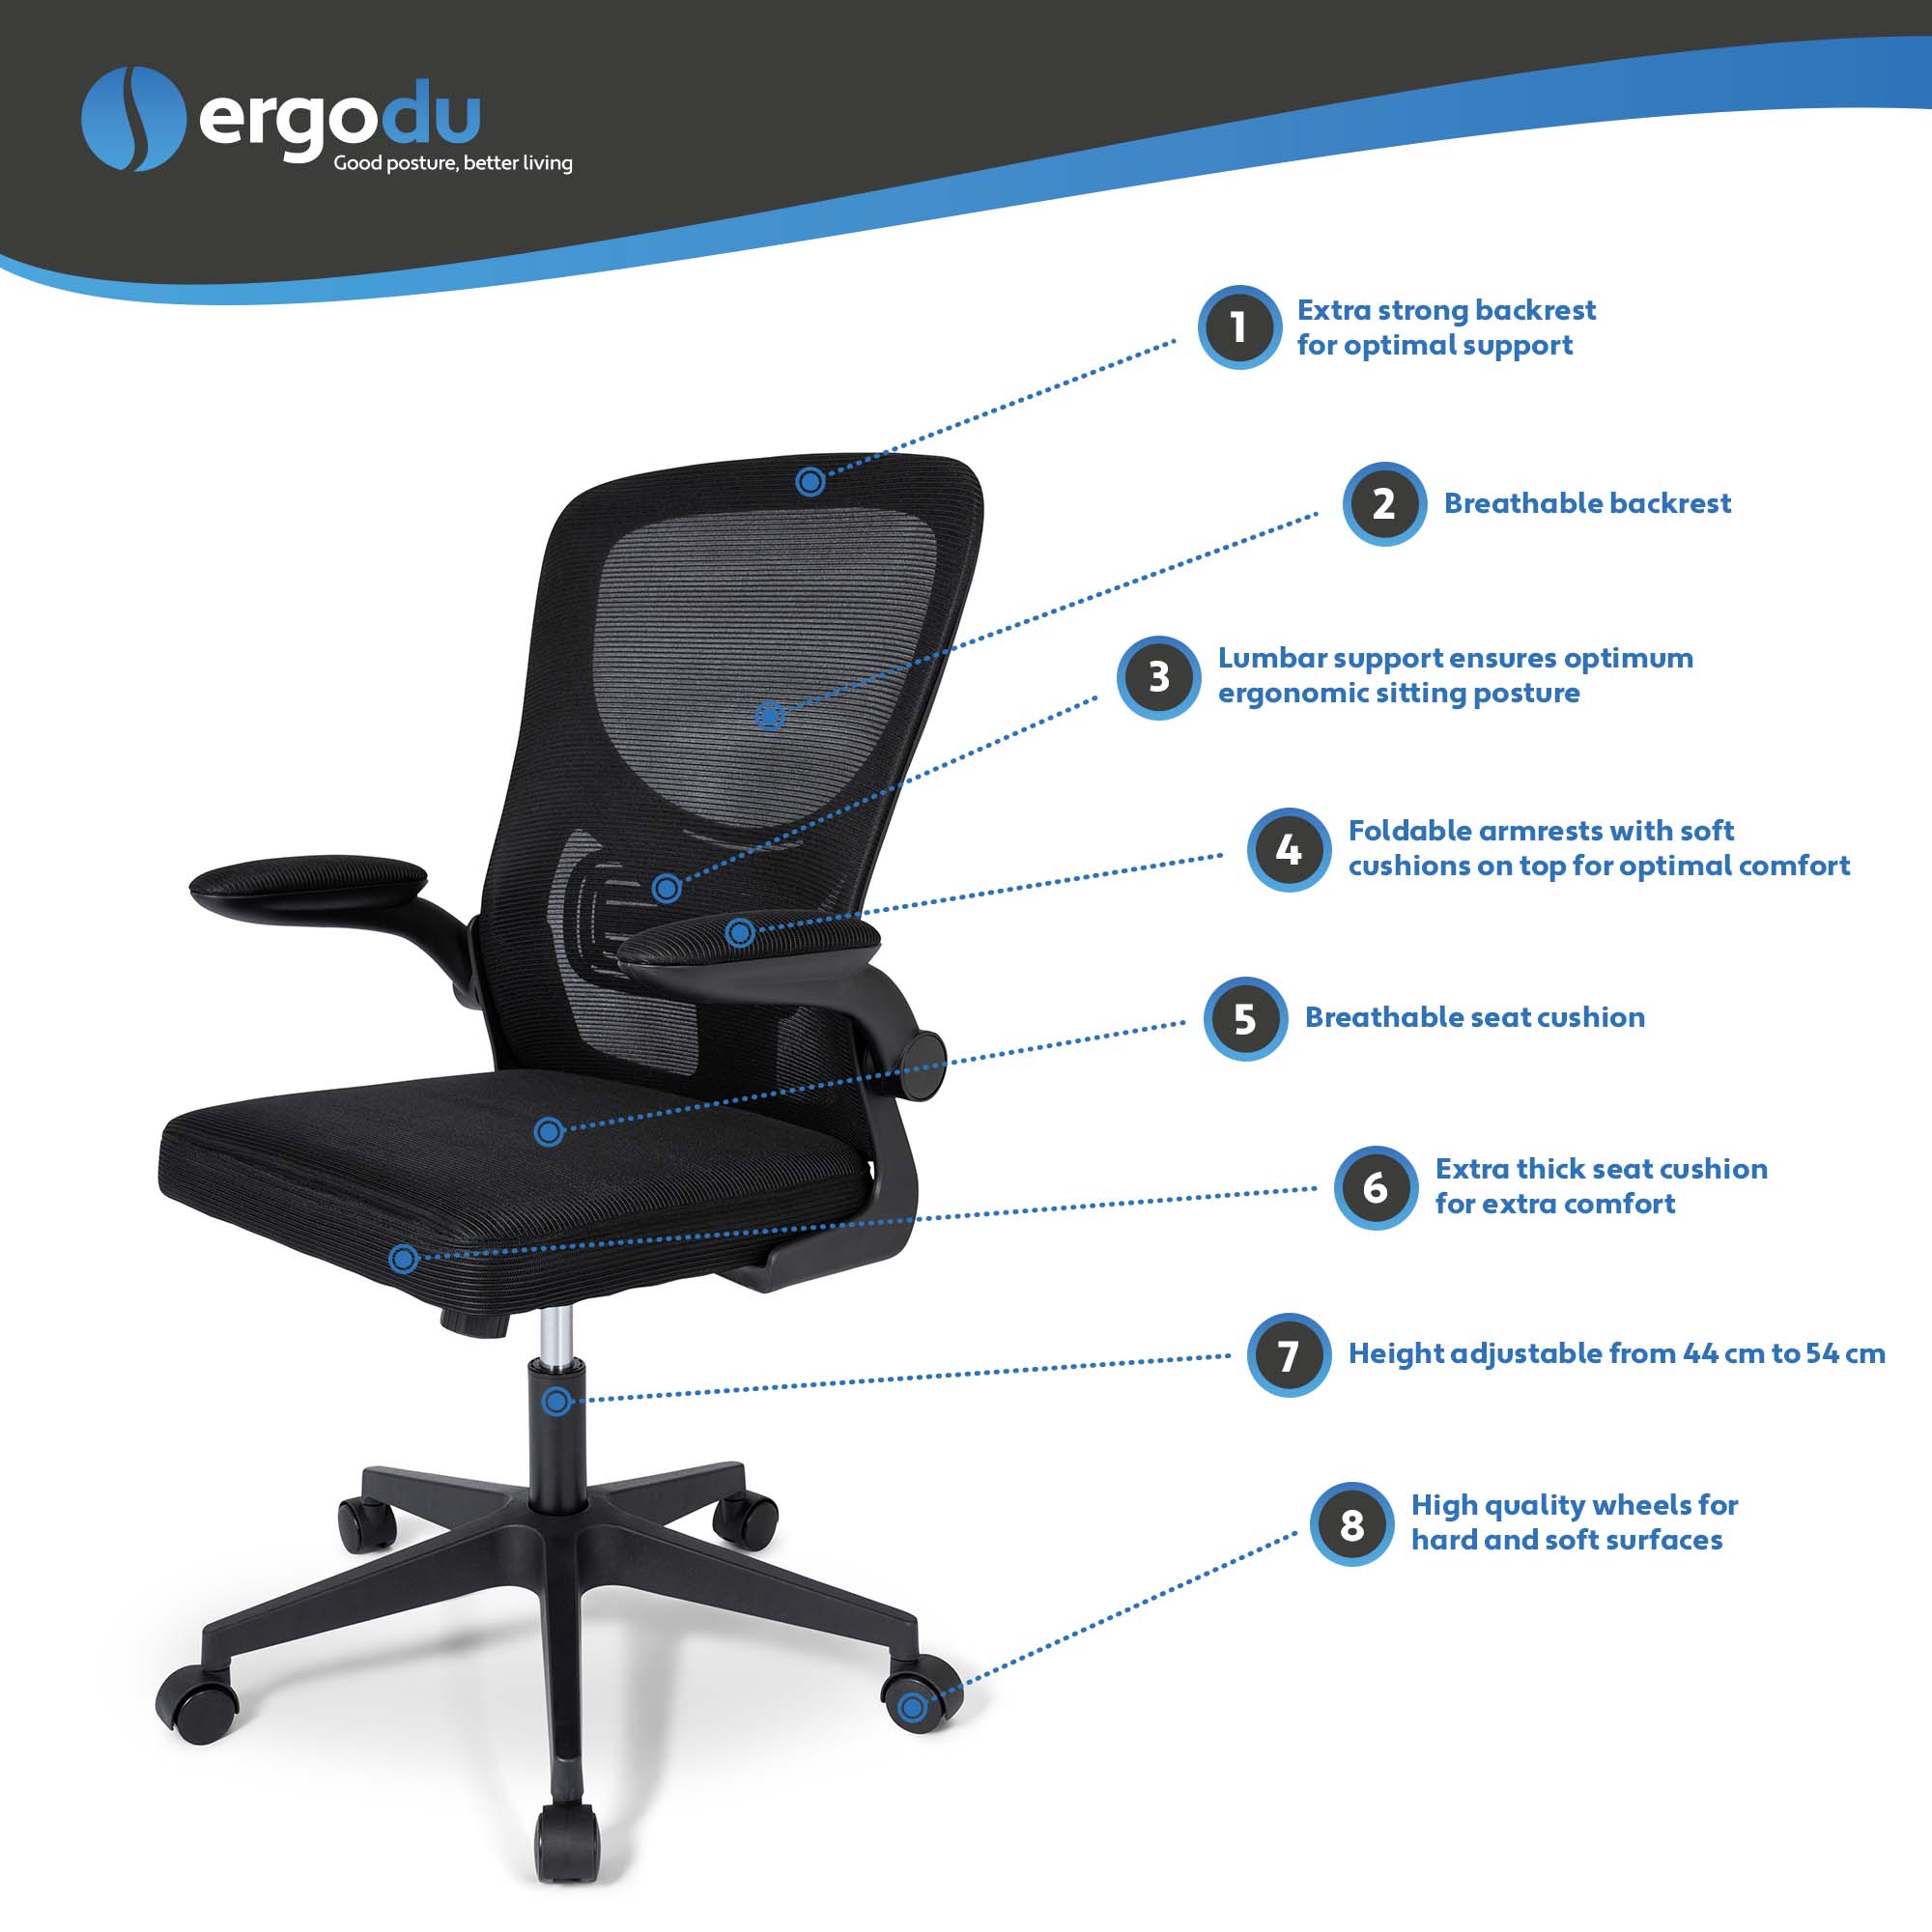 Ergodu Ergonomic Office Chair with Foldable Armrests USP's